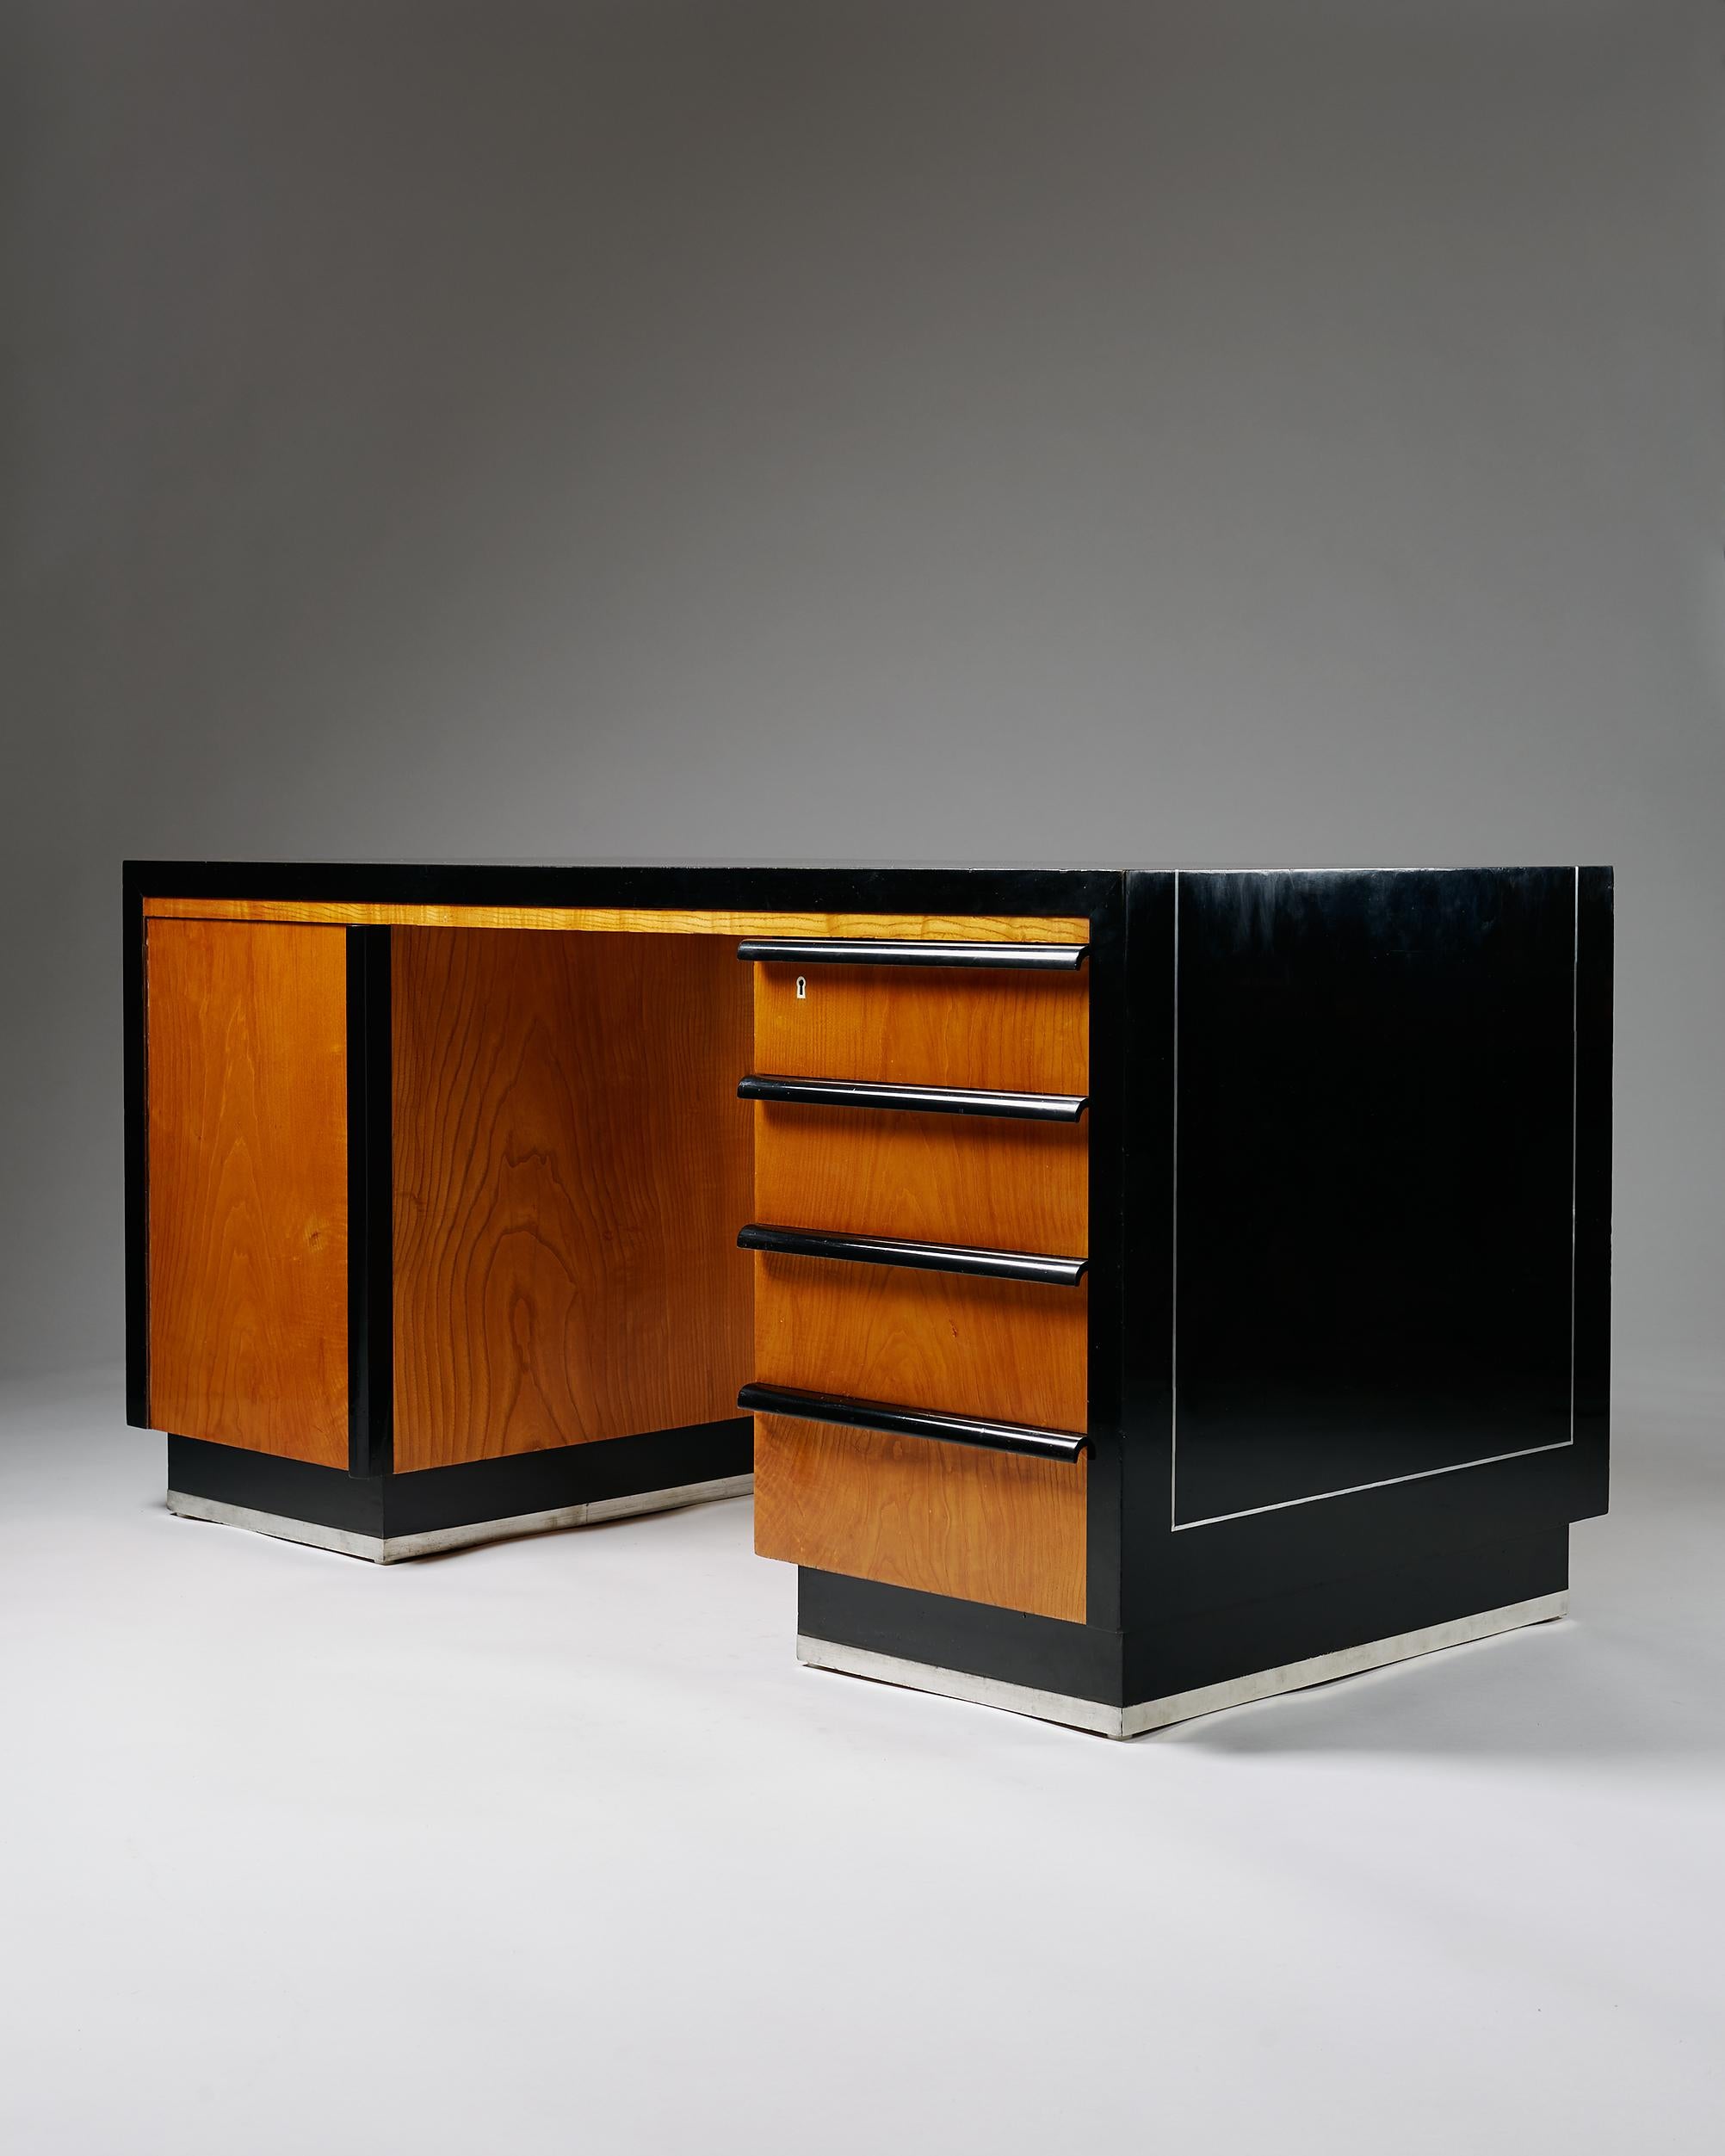 Desk designed by Alvar Andersson for Hyresgästföreningen, retailed by G.A. Berg
Sweden. 1930s.

Black lacquered birch, elm and pewter inlay.

Dimensions:
H: 75 cm/ 29 1/2''
L: 150 cm/ 4' 11''
D: 75 cm/ 2' 6''

Provenance: private collection, Sweden.